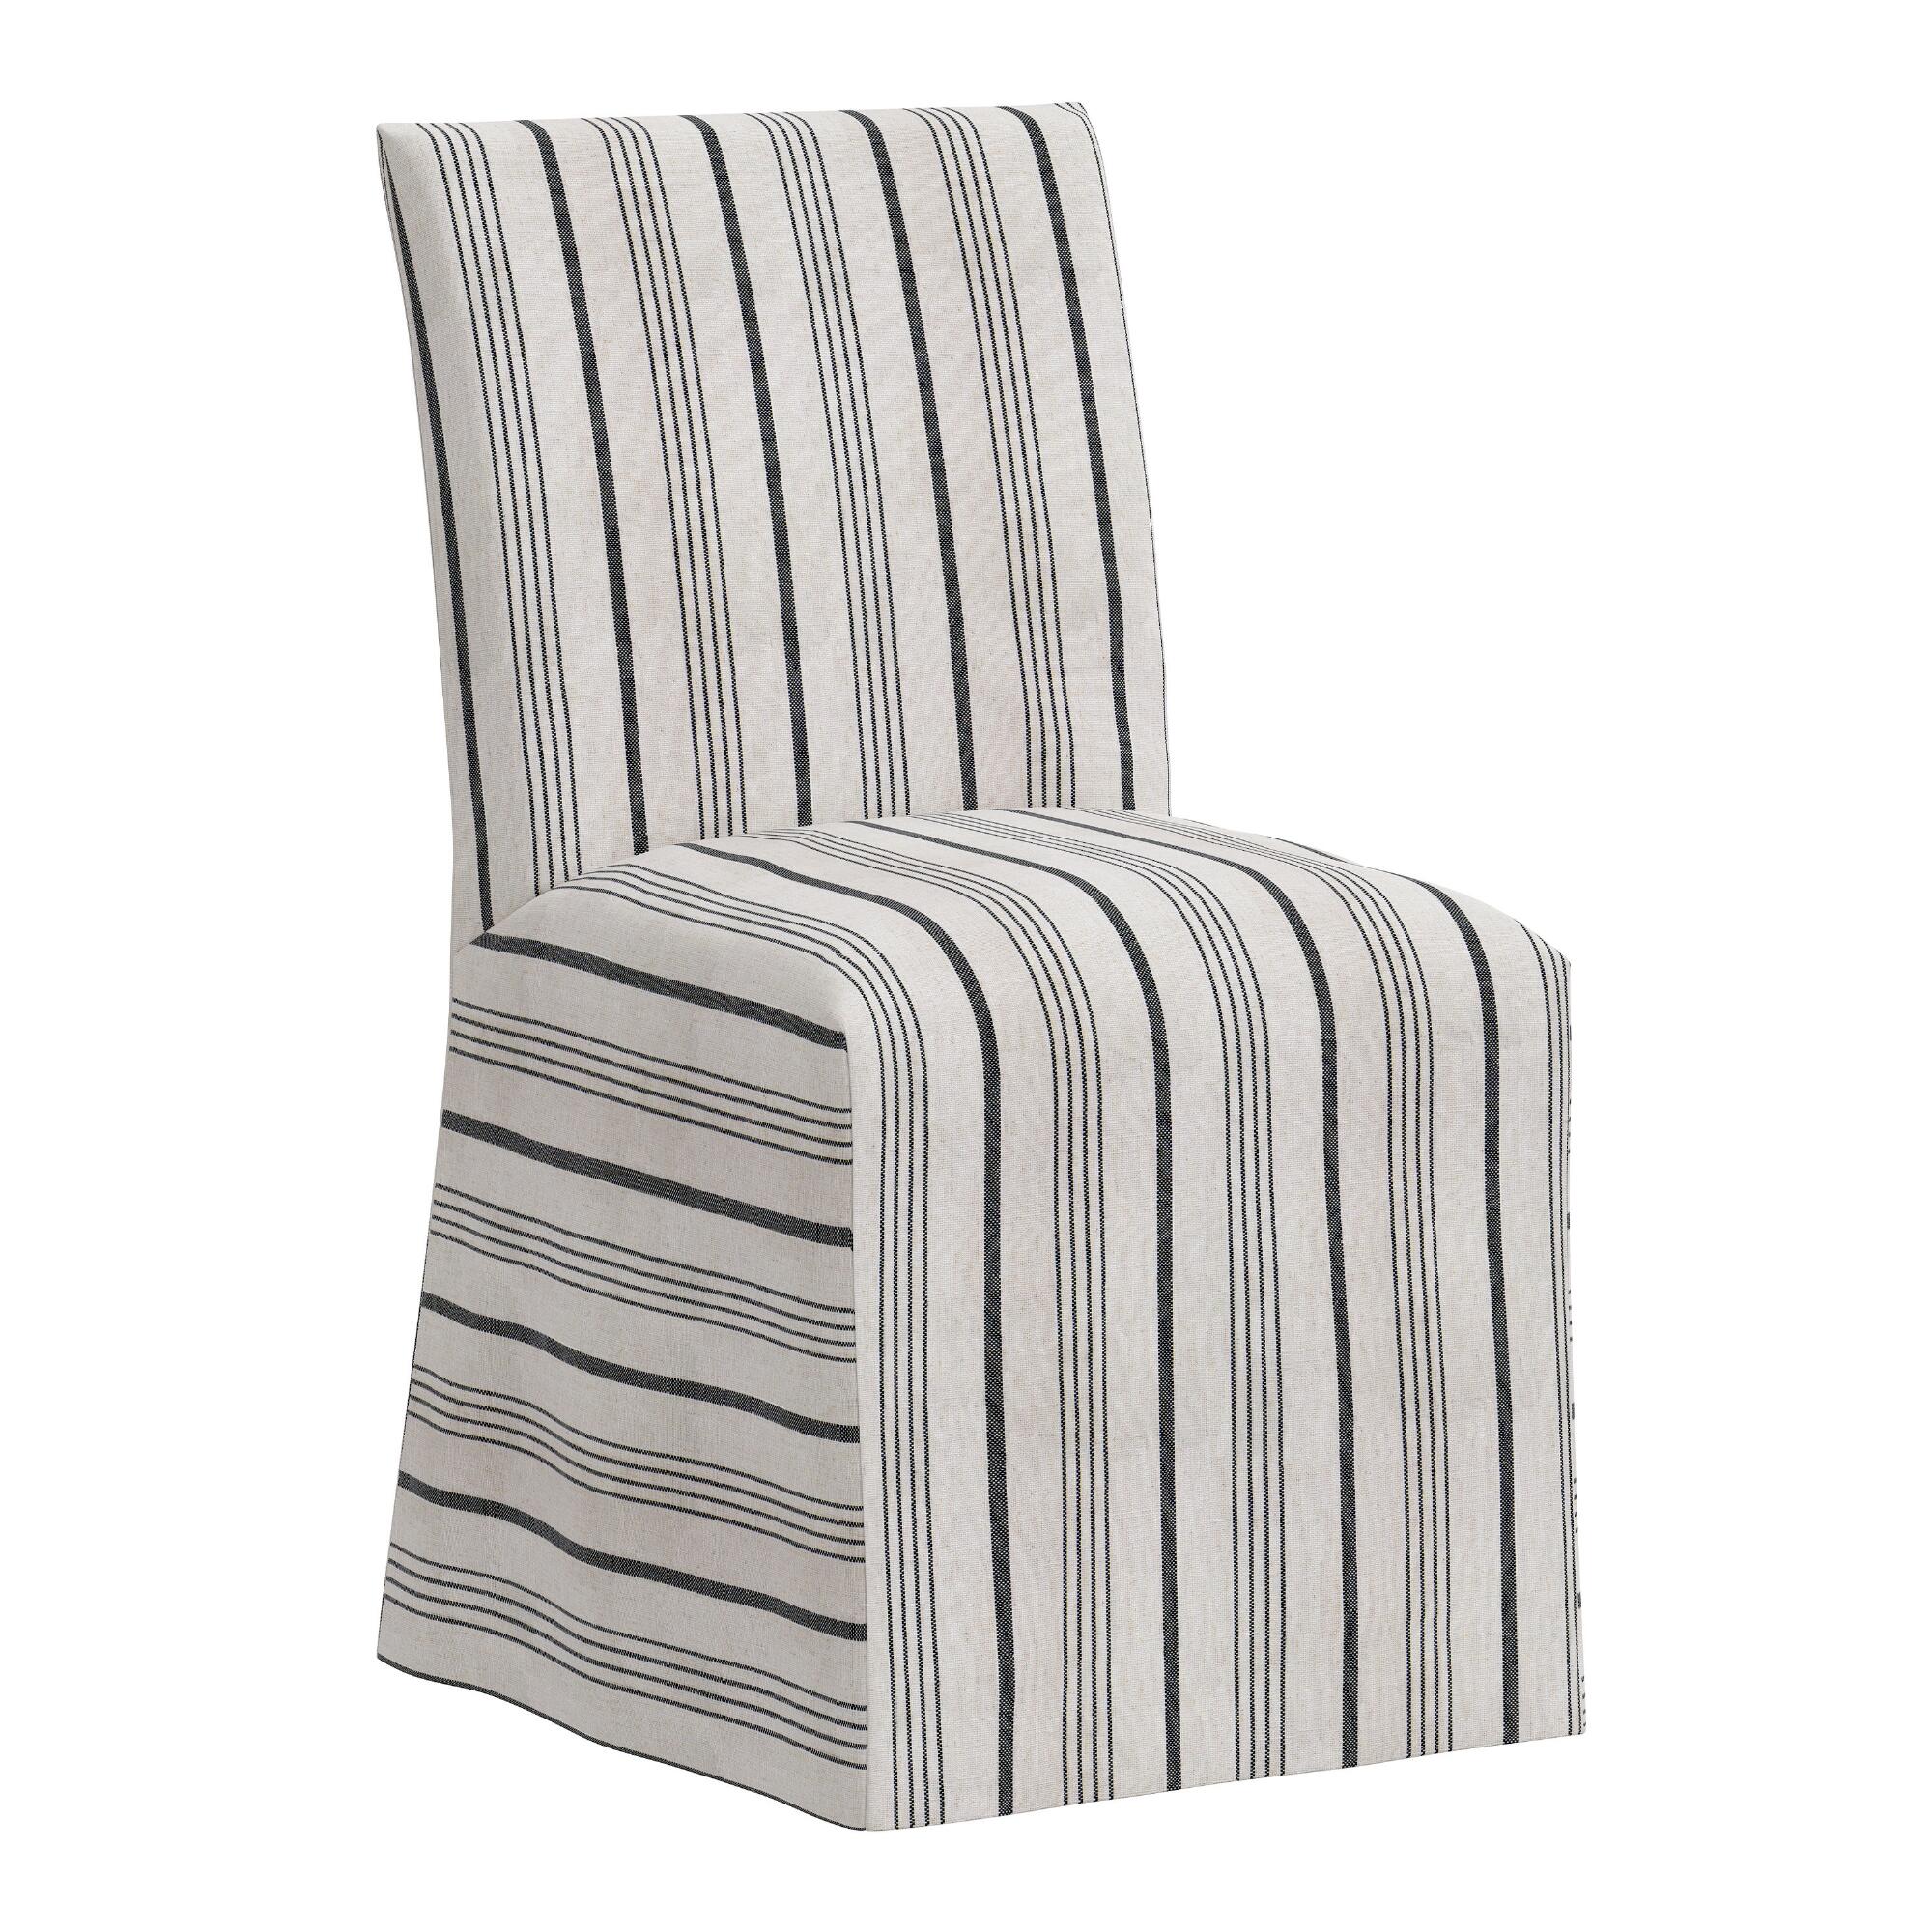 Print Slipcover Landon Dining Chair: Gray/Natural by World Market